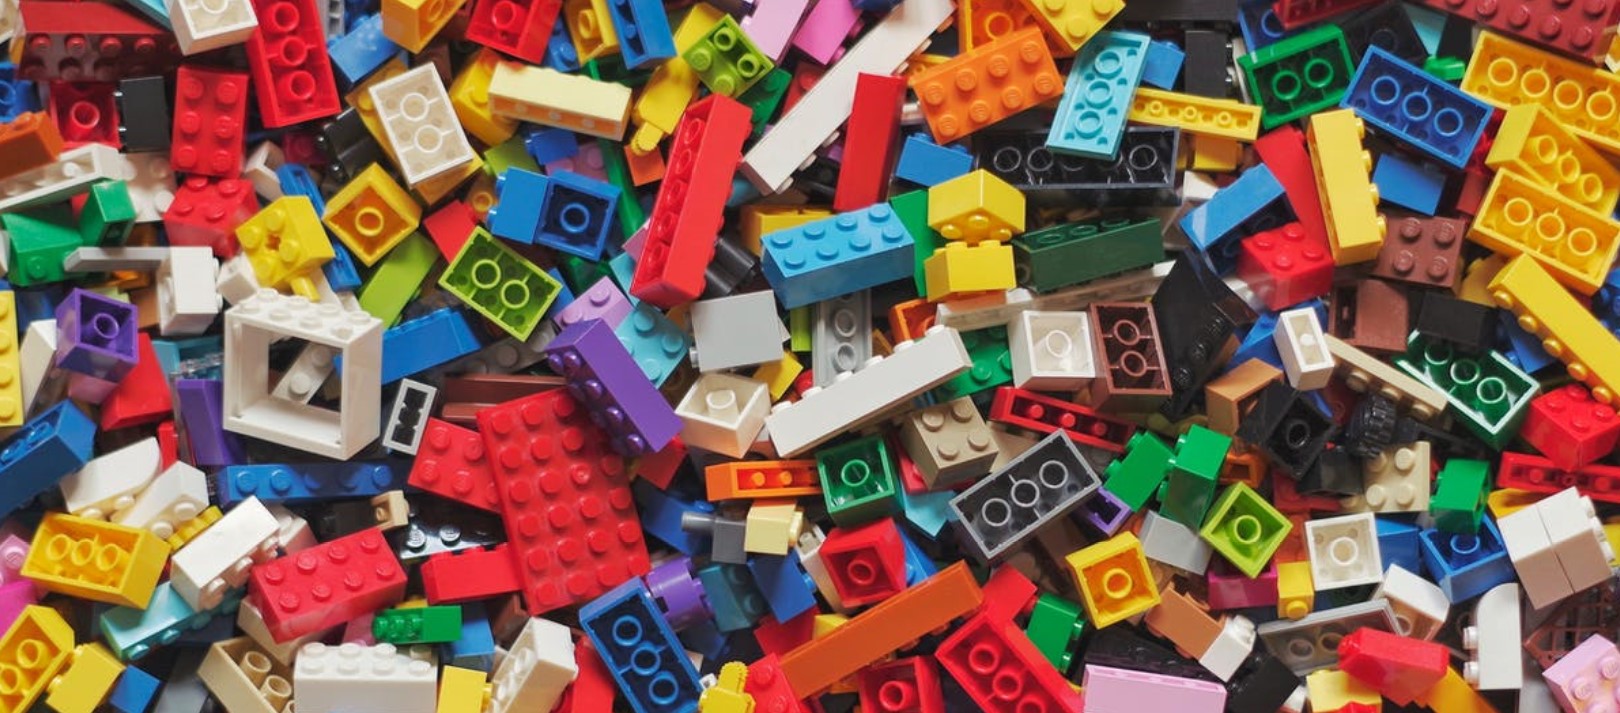 Colourful plastic Lego bricks